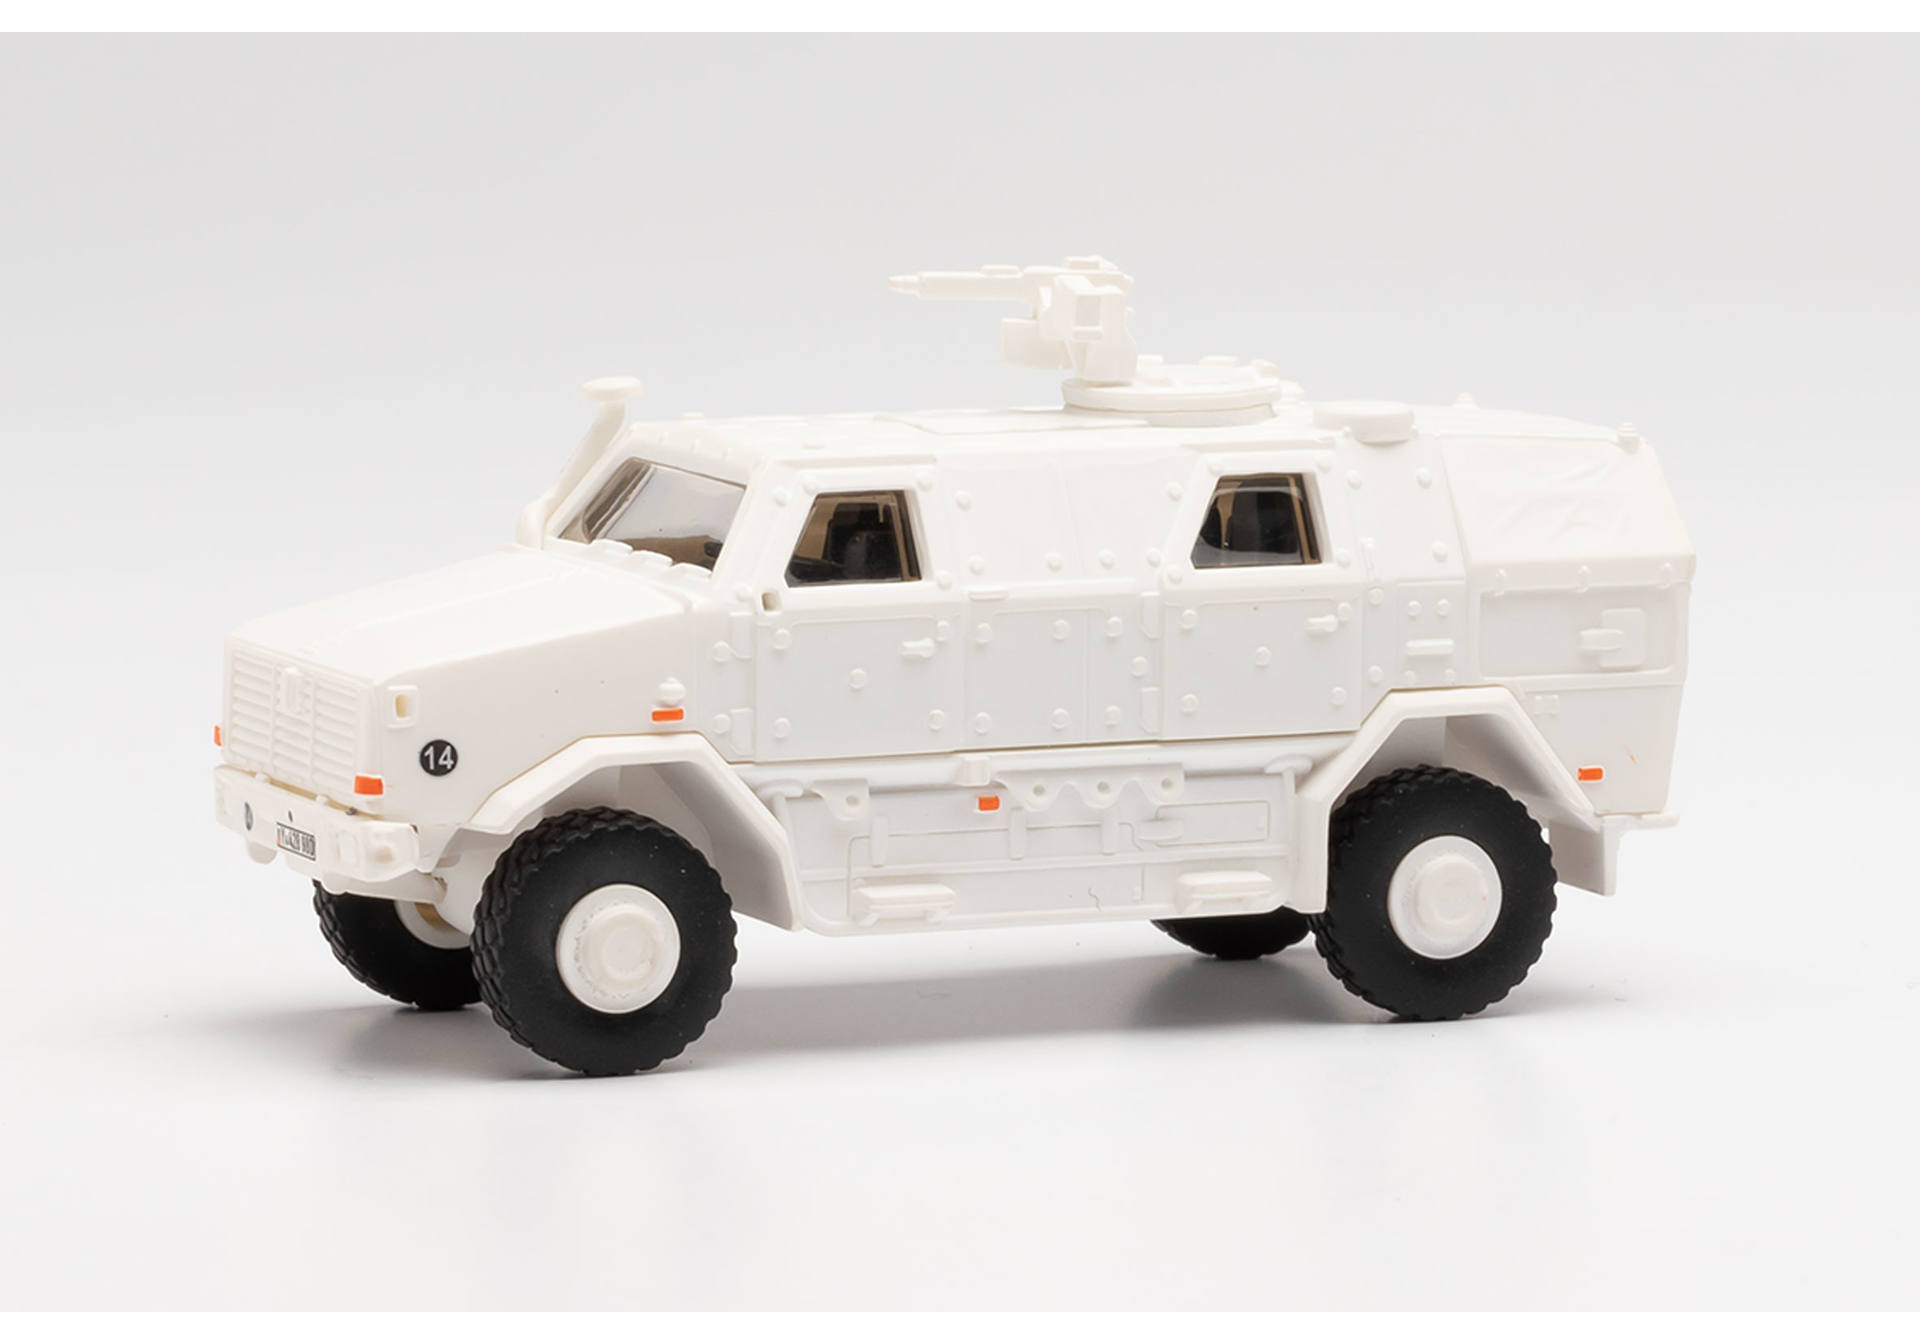 Allschutz-Transport-Fahrzeug (ATF) Dingo "UN"